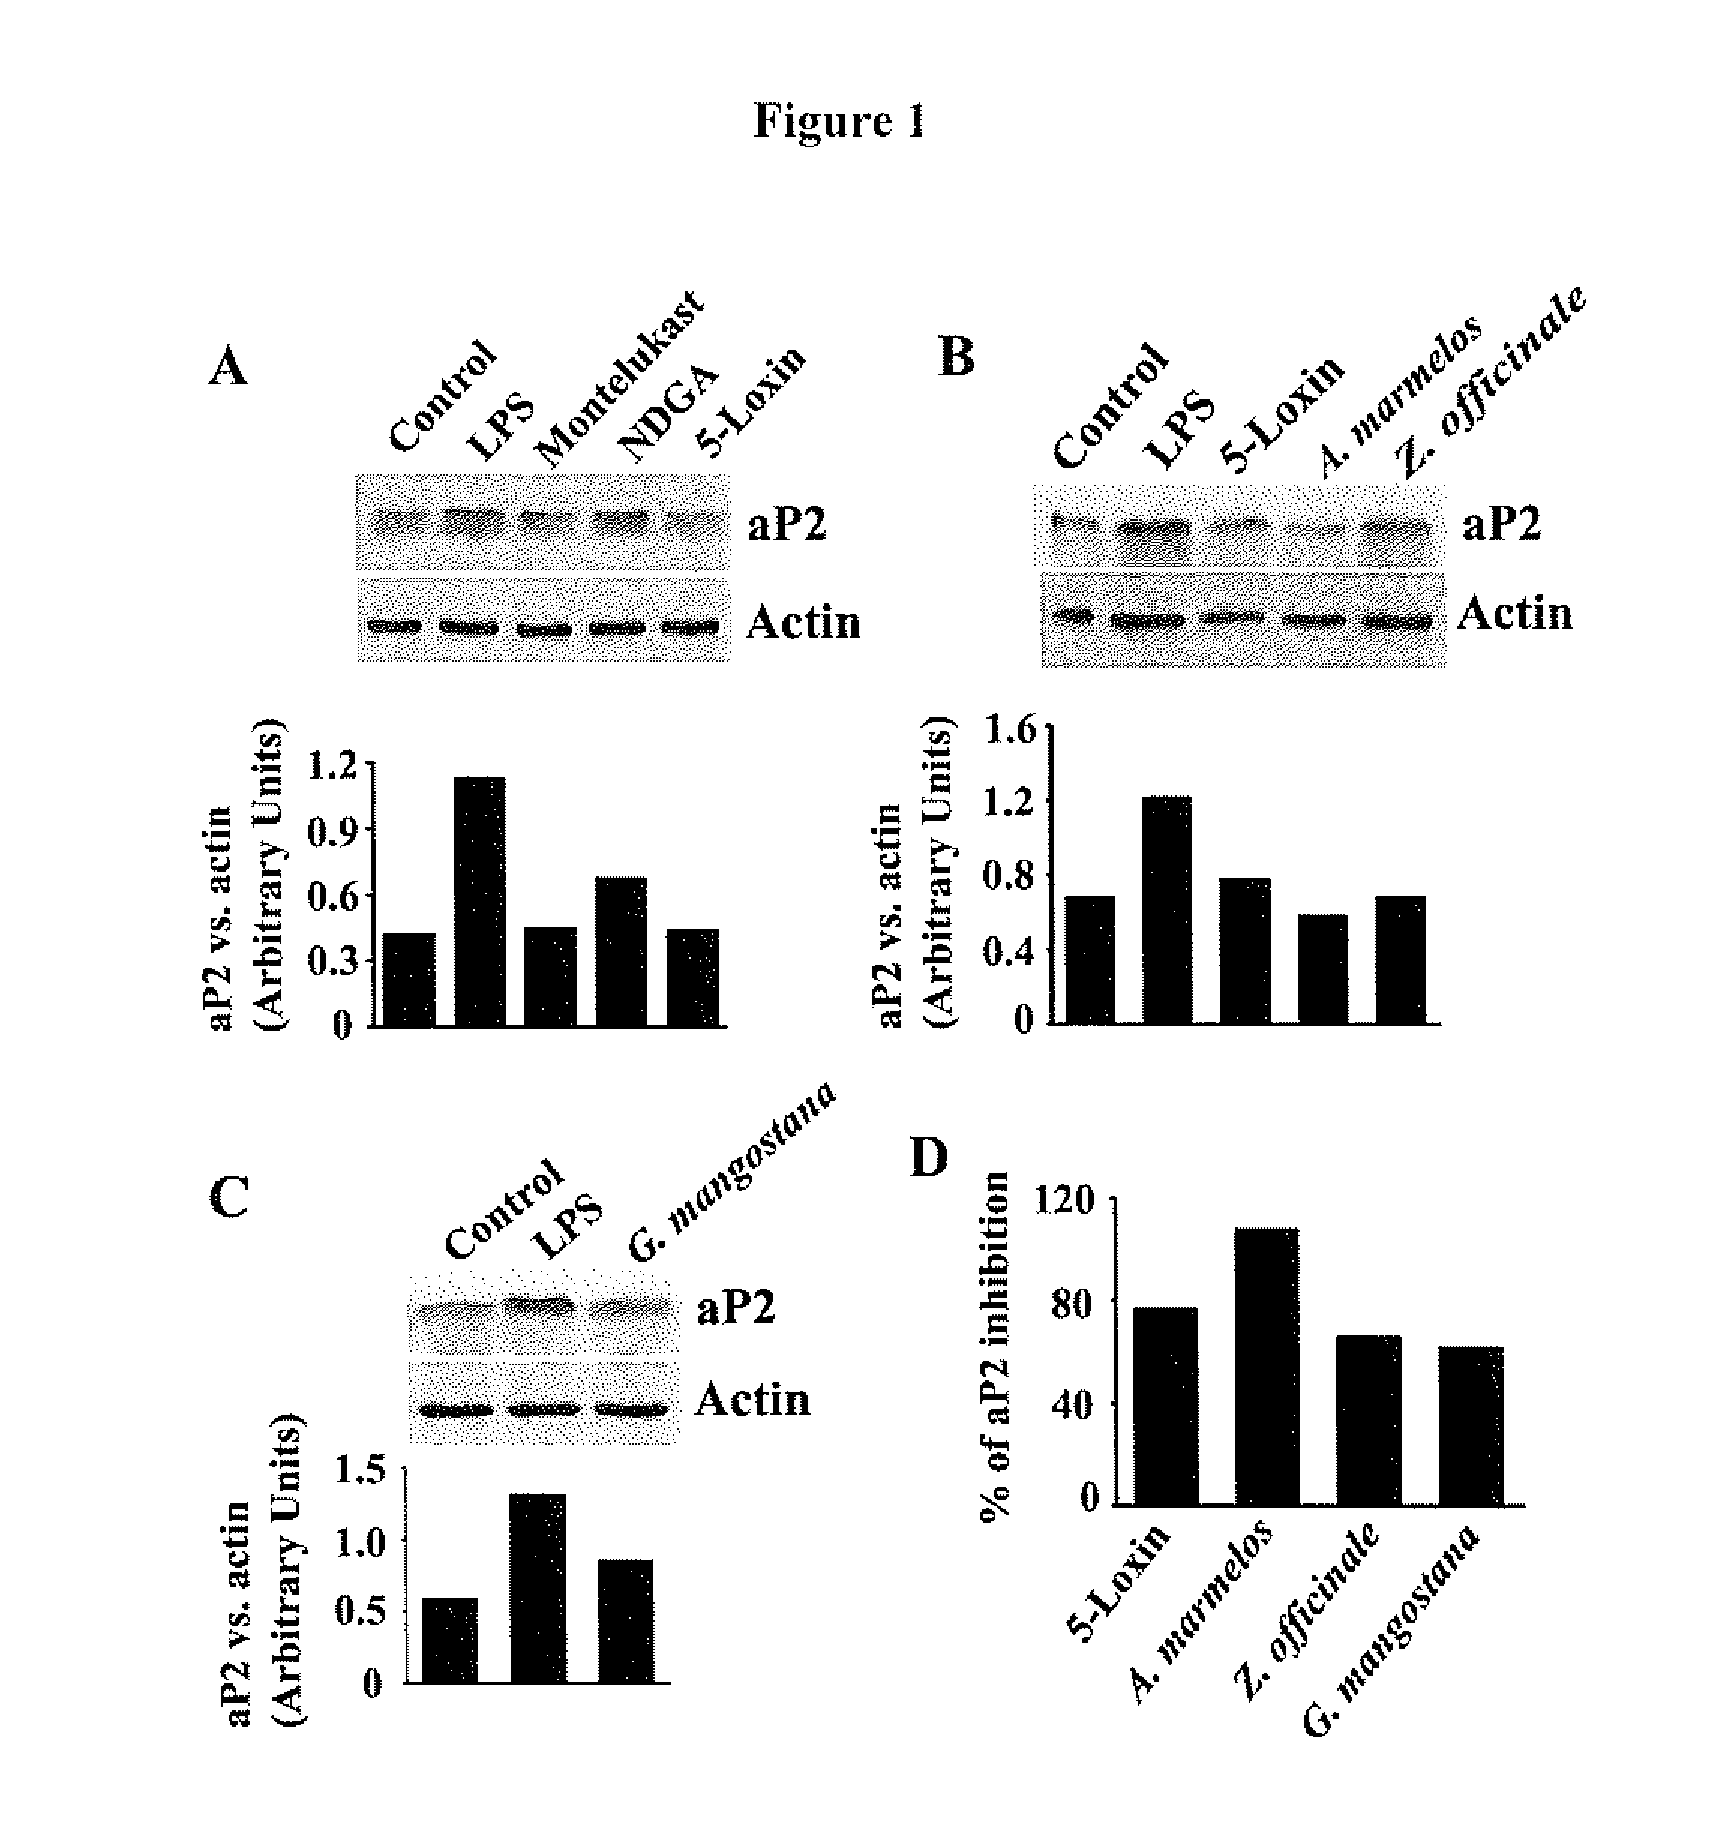 Anti-adipocyte fatty acid-binding protein (AP2), Anti-flap and Anti-cyslt1 receptor herbal compositions